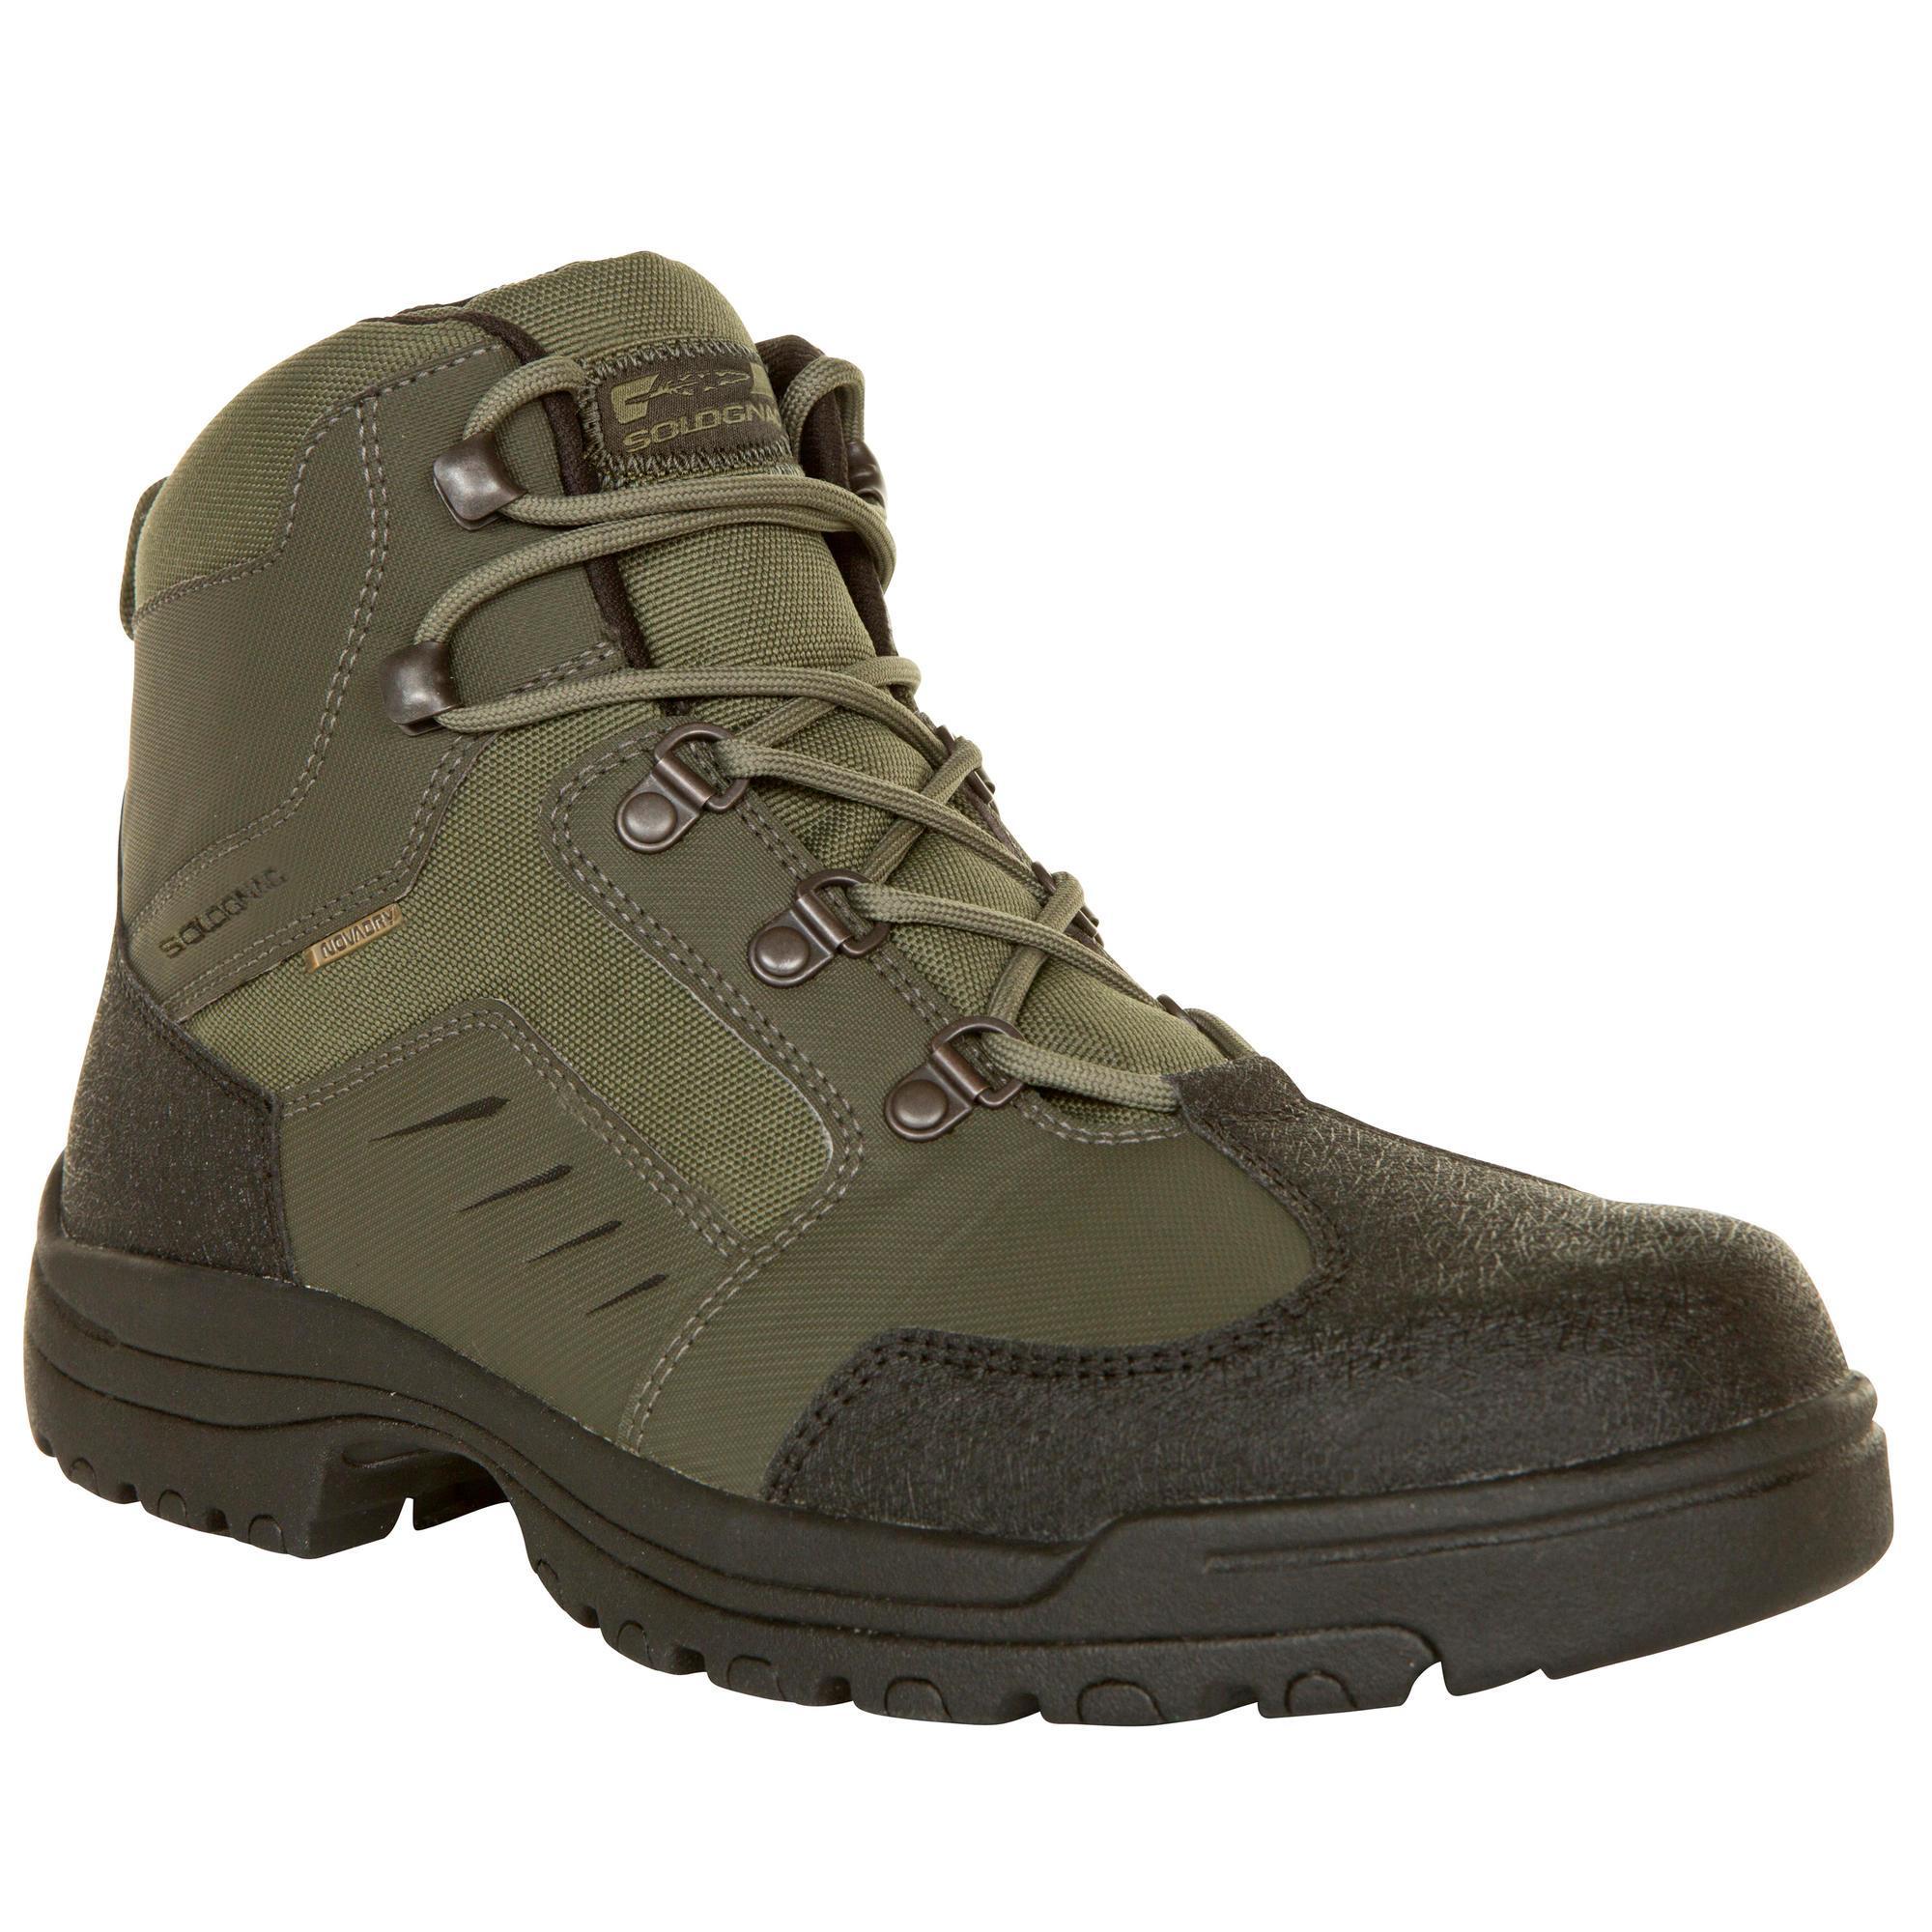 100 Waterproof Hunting Boots - Green 